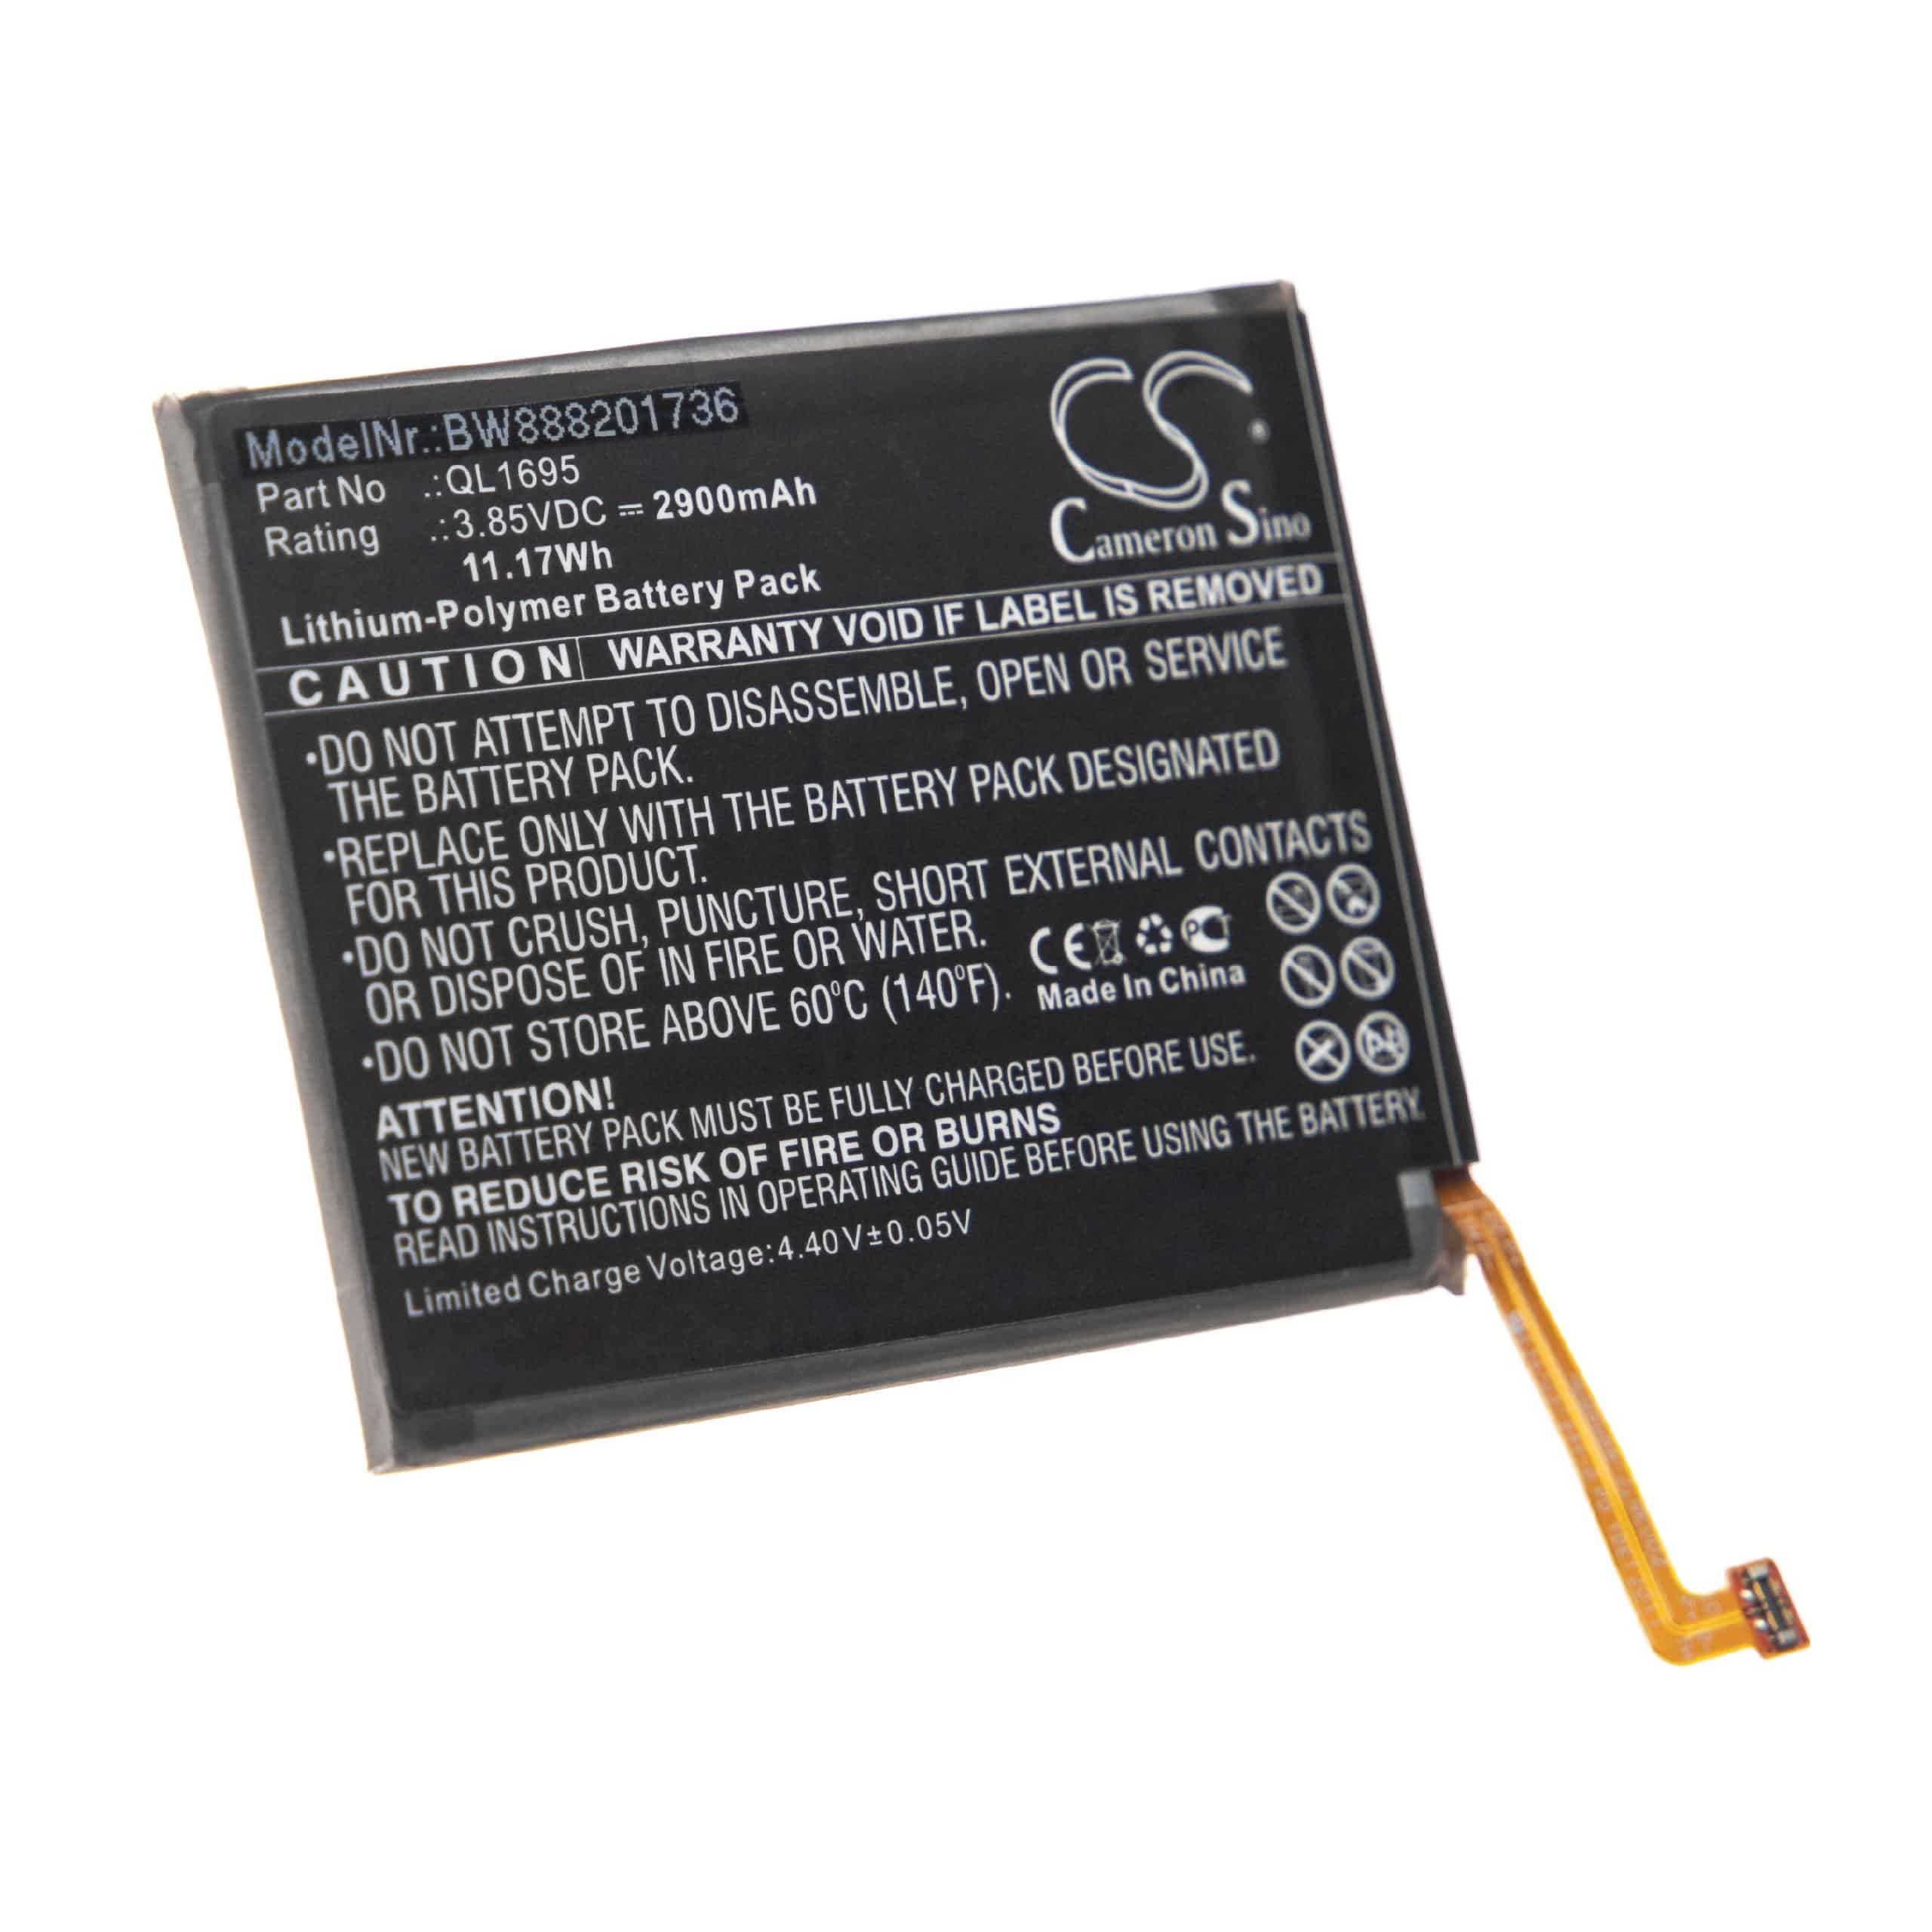 Mobile Phone Battery Replacement for Samsung QL1695 - 2900mAh 3.85V Li-polymer